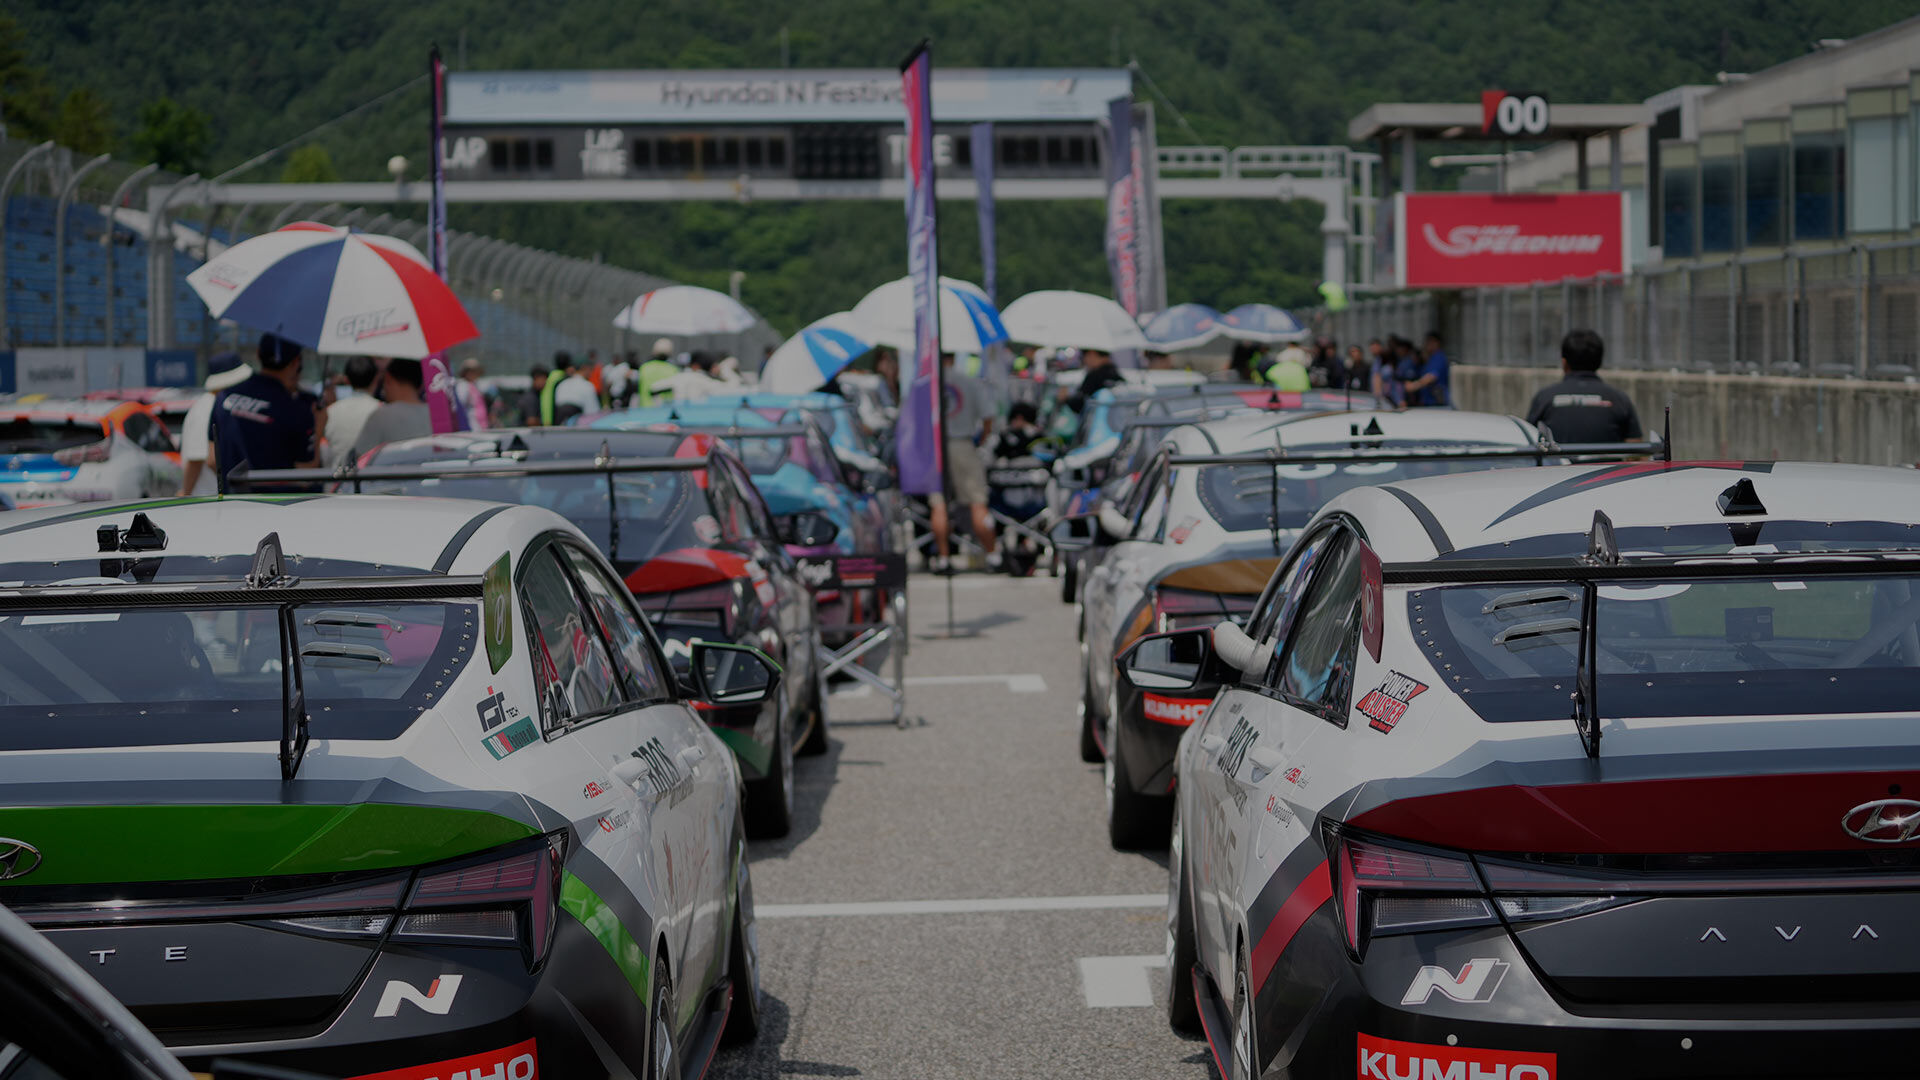 Hyundai N Festival The biggest one-make race in Korea